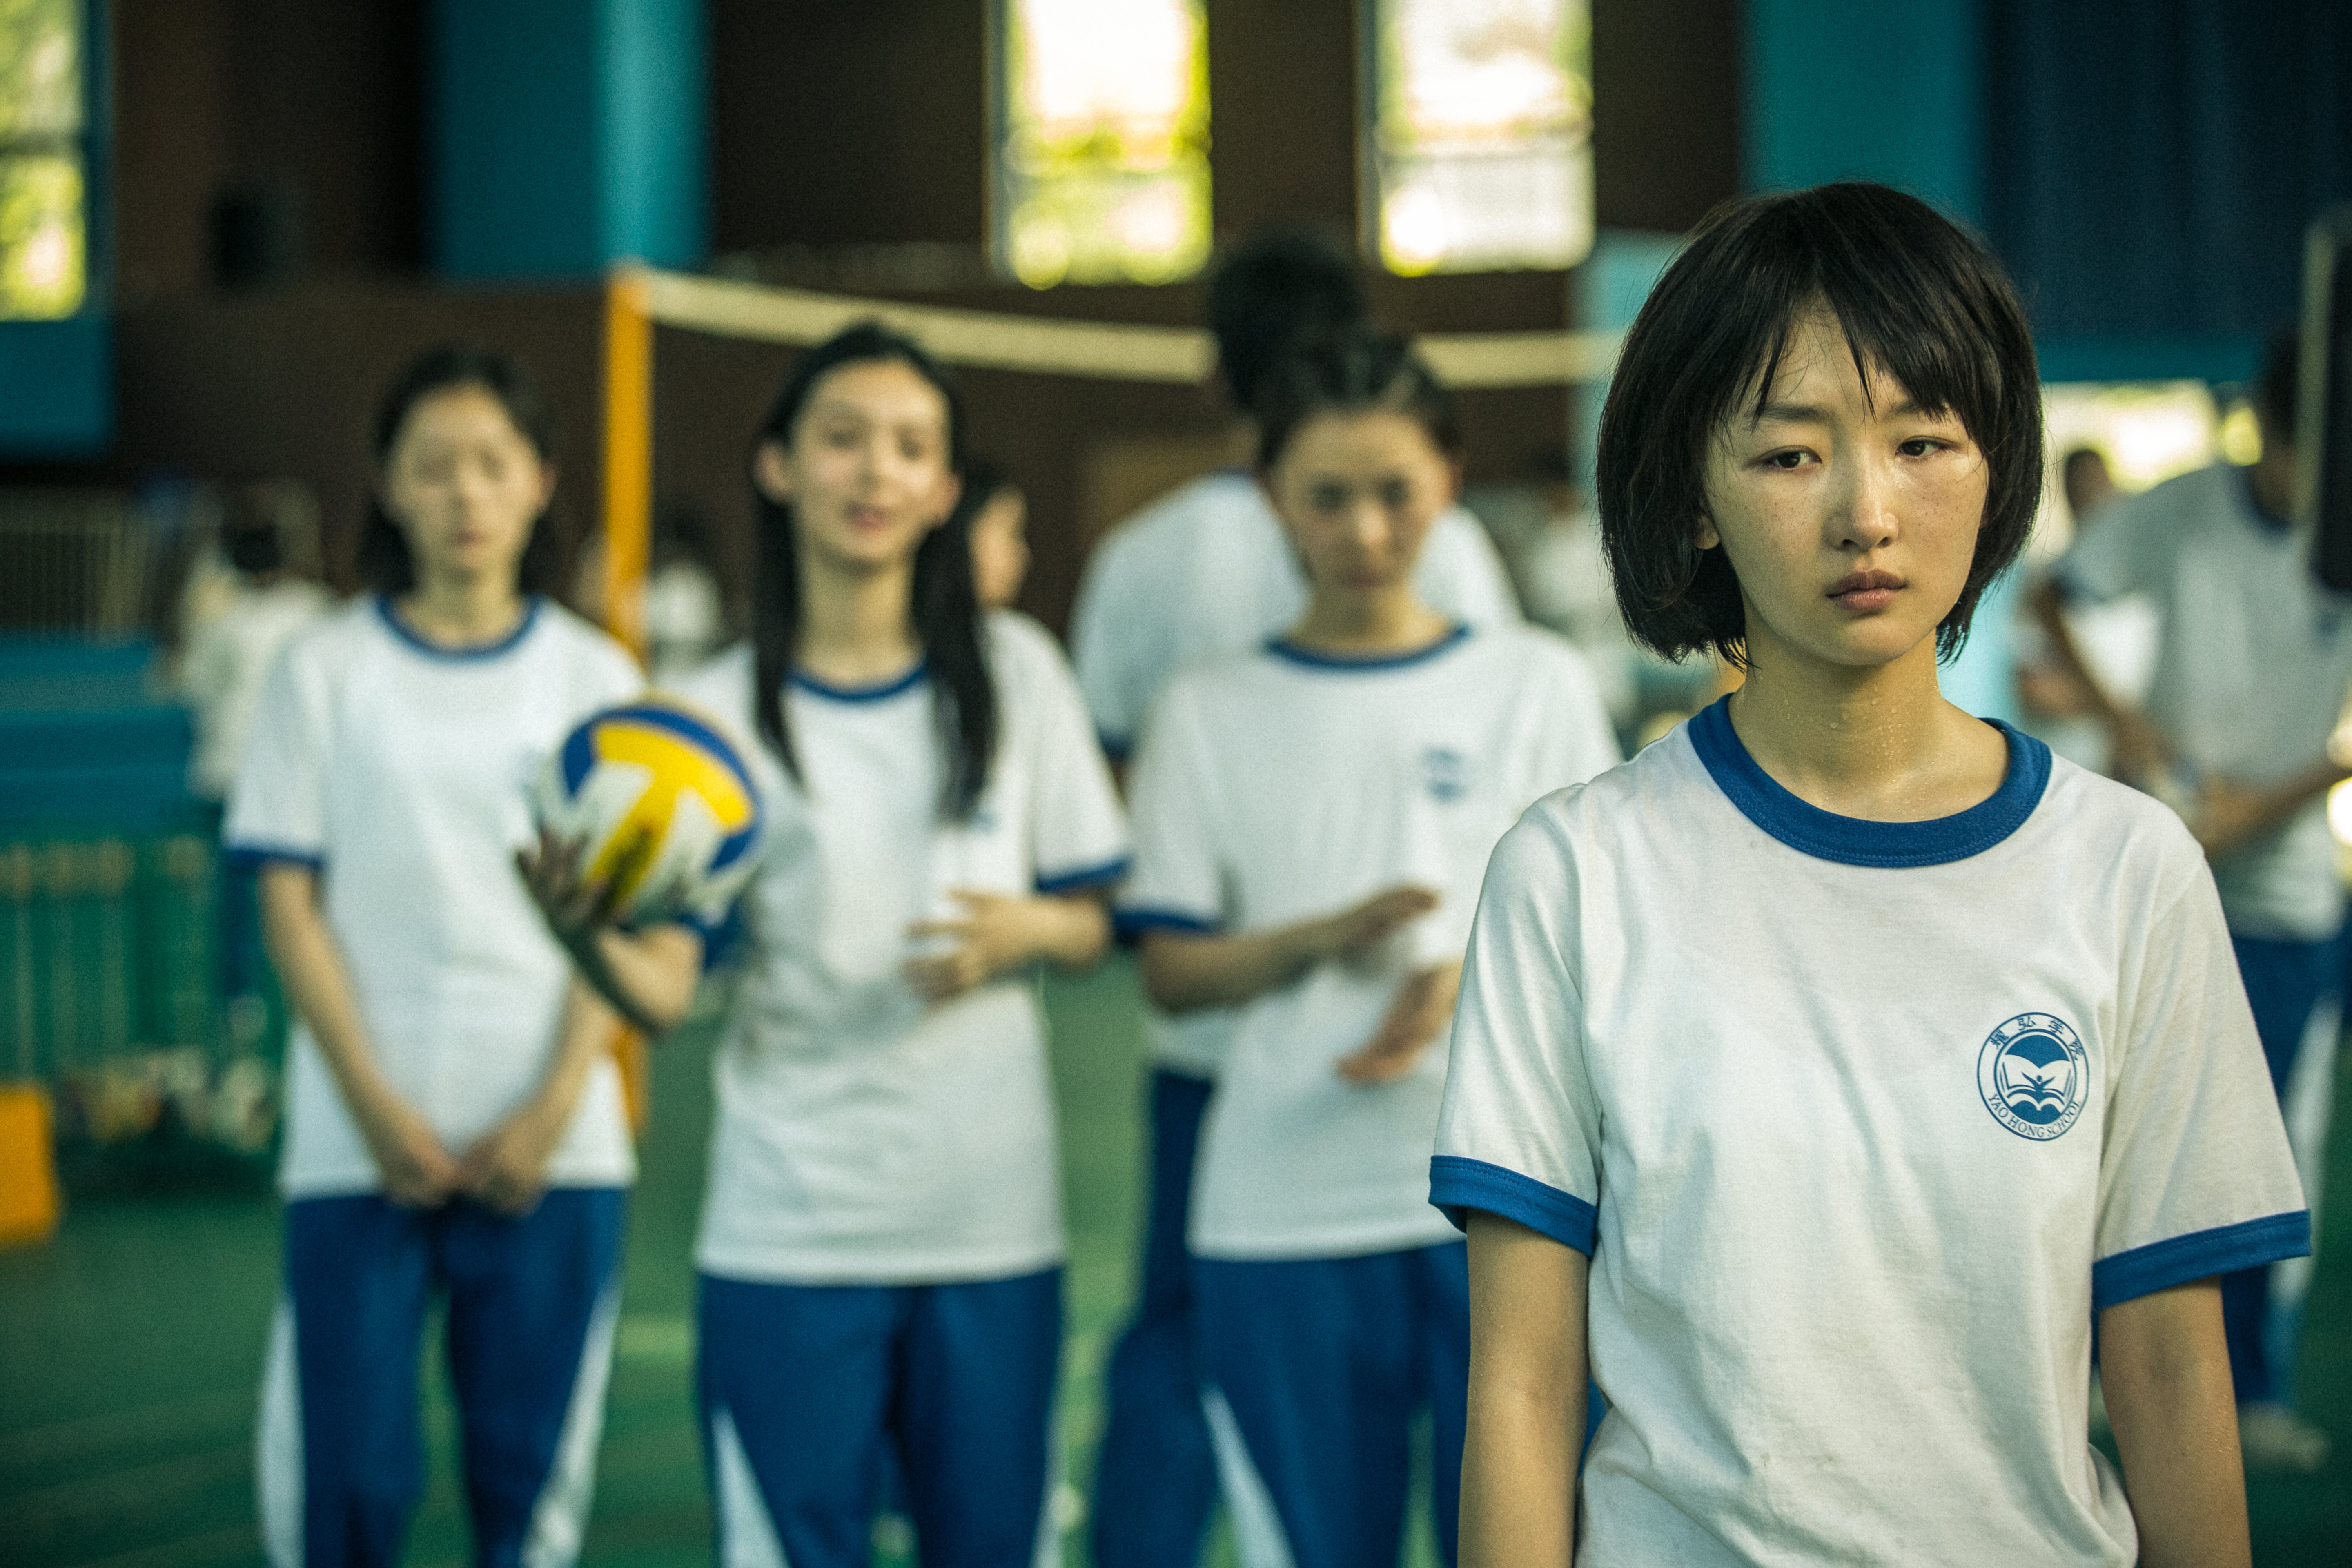 Better Days film review: Zhou Dongyu is riveting in Derek Tsang's deeply  poignant bullying drama